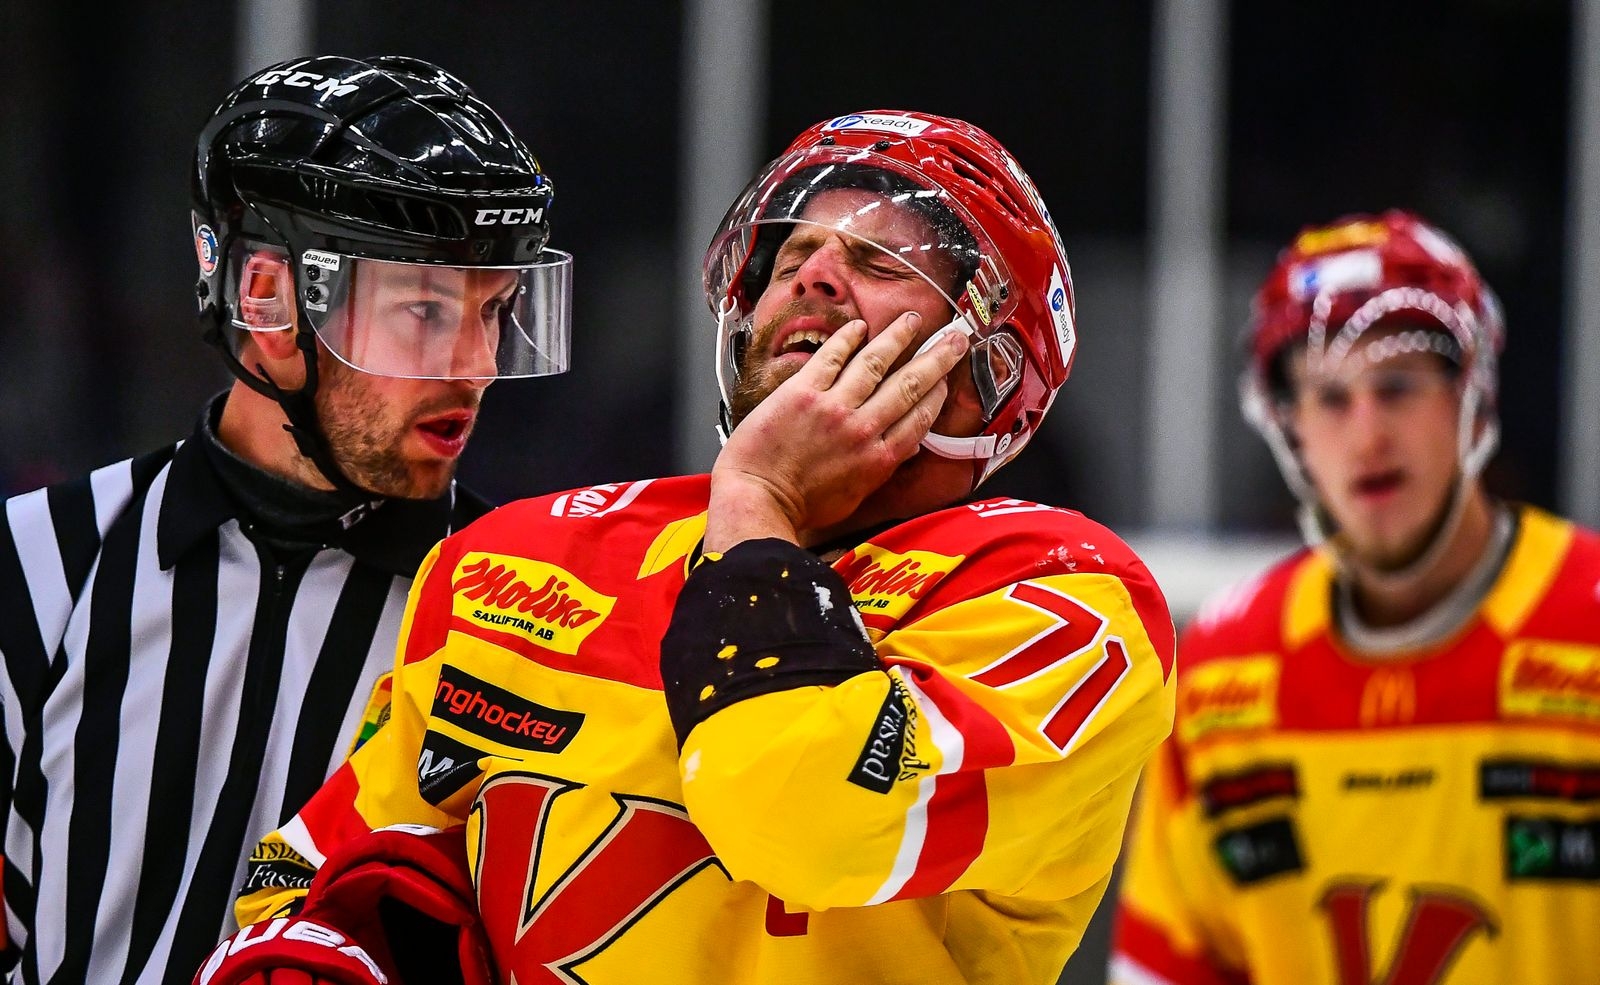 20180915 NYBRO. Nybro Vikings fÃ¶rlorade premiÃ¤ren i Hockeyettan mot Kalmar HC med 2-5.
Kalmars nr 71 fick en smÃ¤ll i ansiktet.
Foto:SUVAD MRKONJIC
Code10042